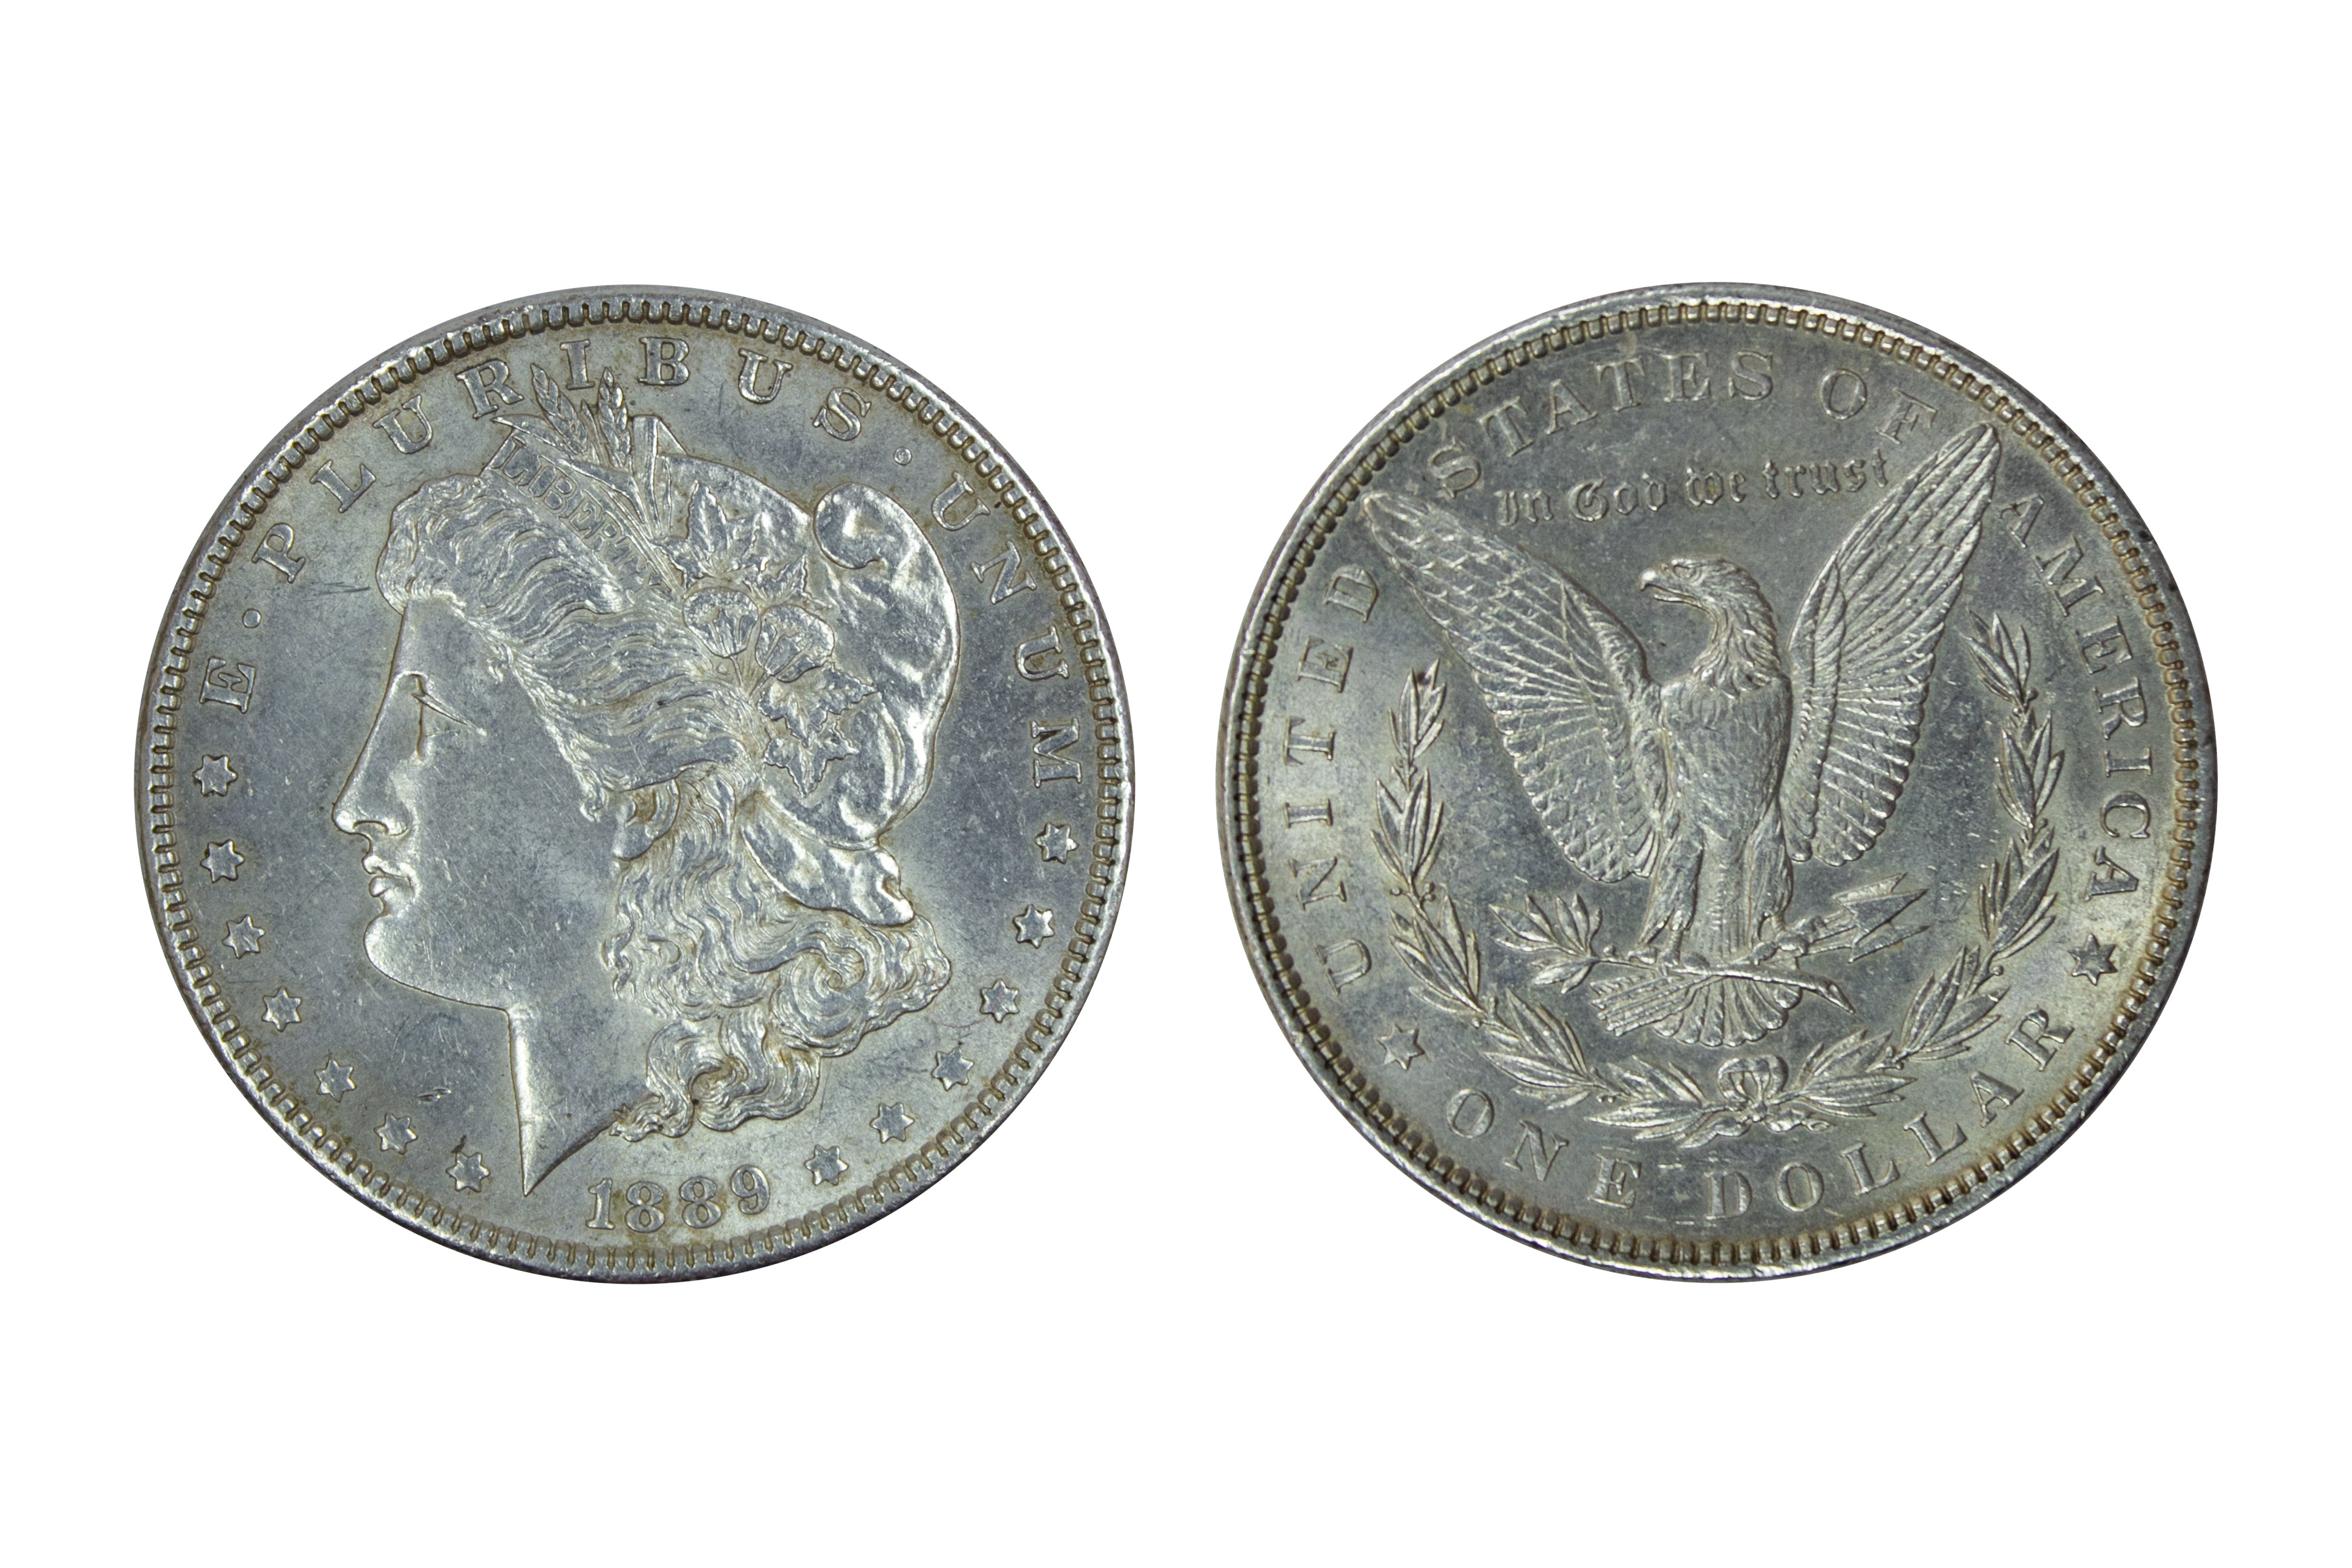 Morgan Silver Dollar: A Glittering Piece of American History